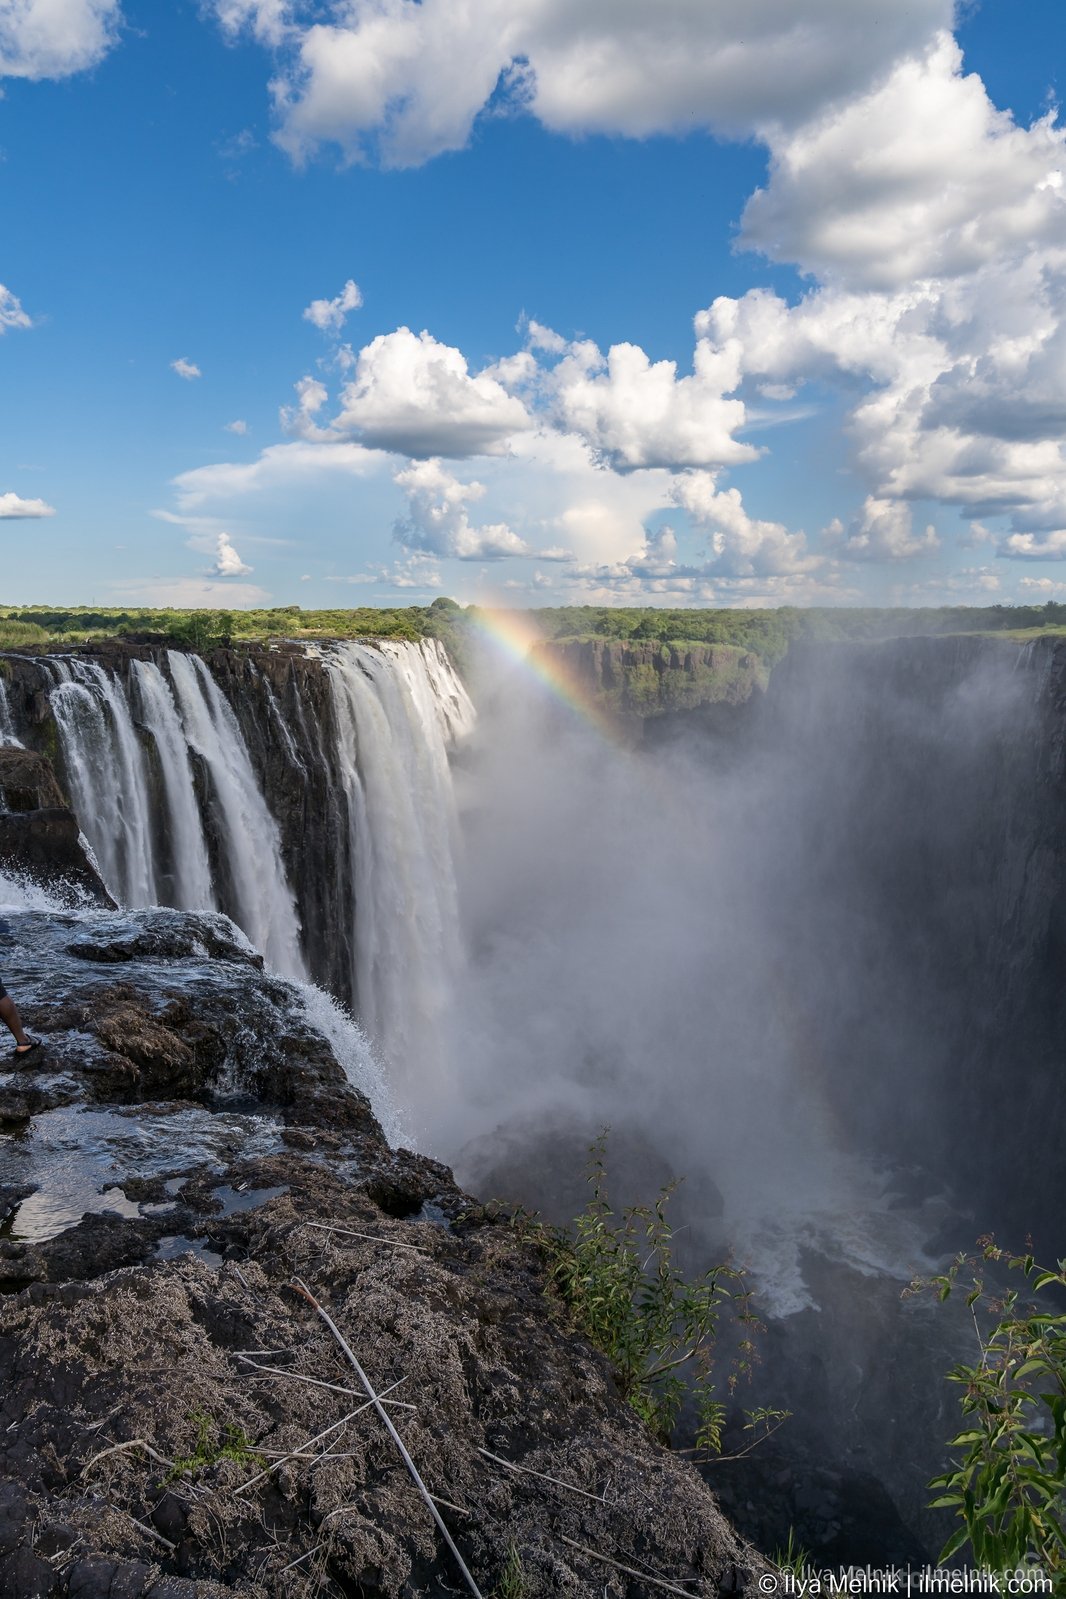 Zambia photo locations